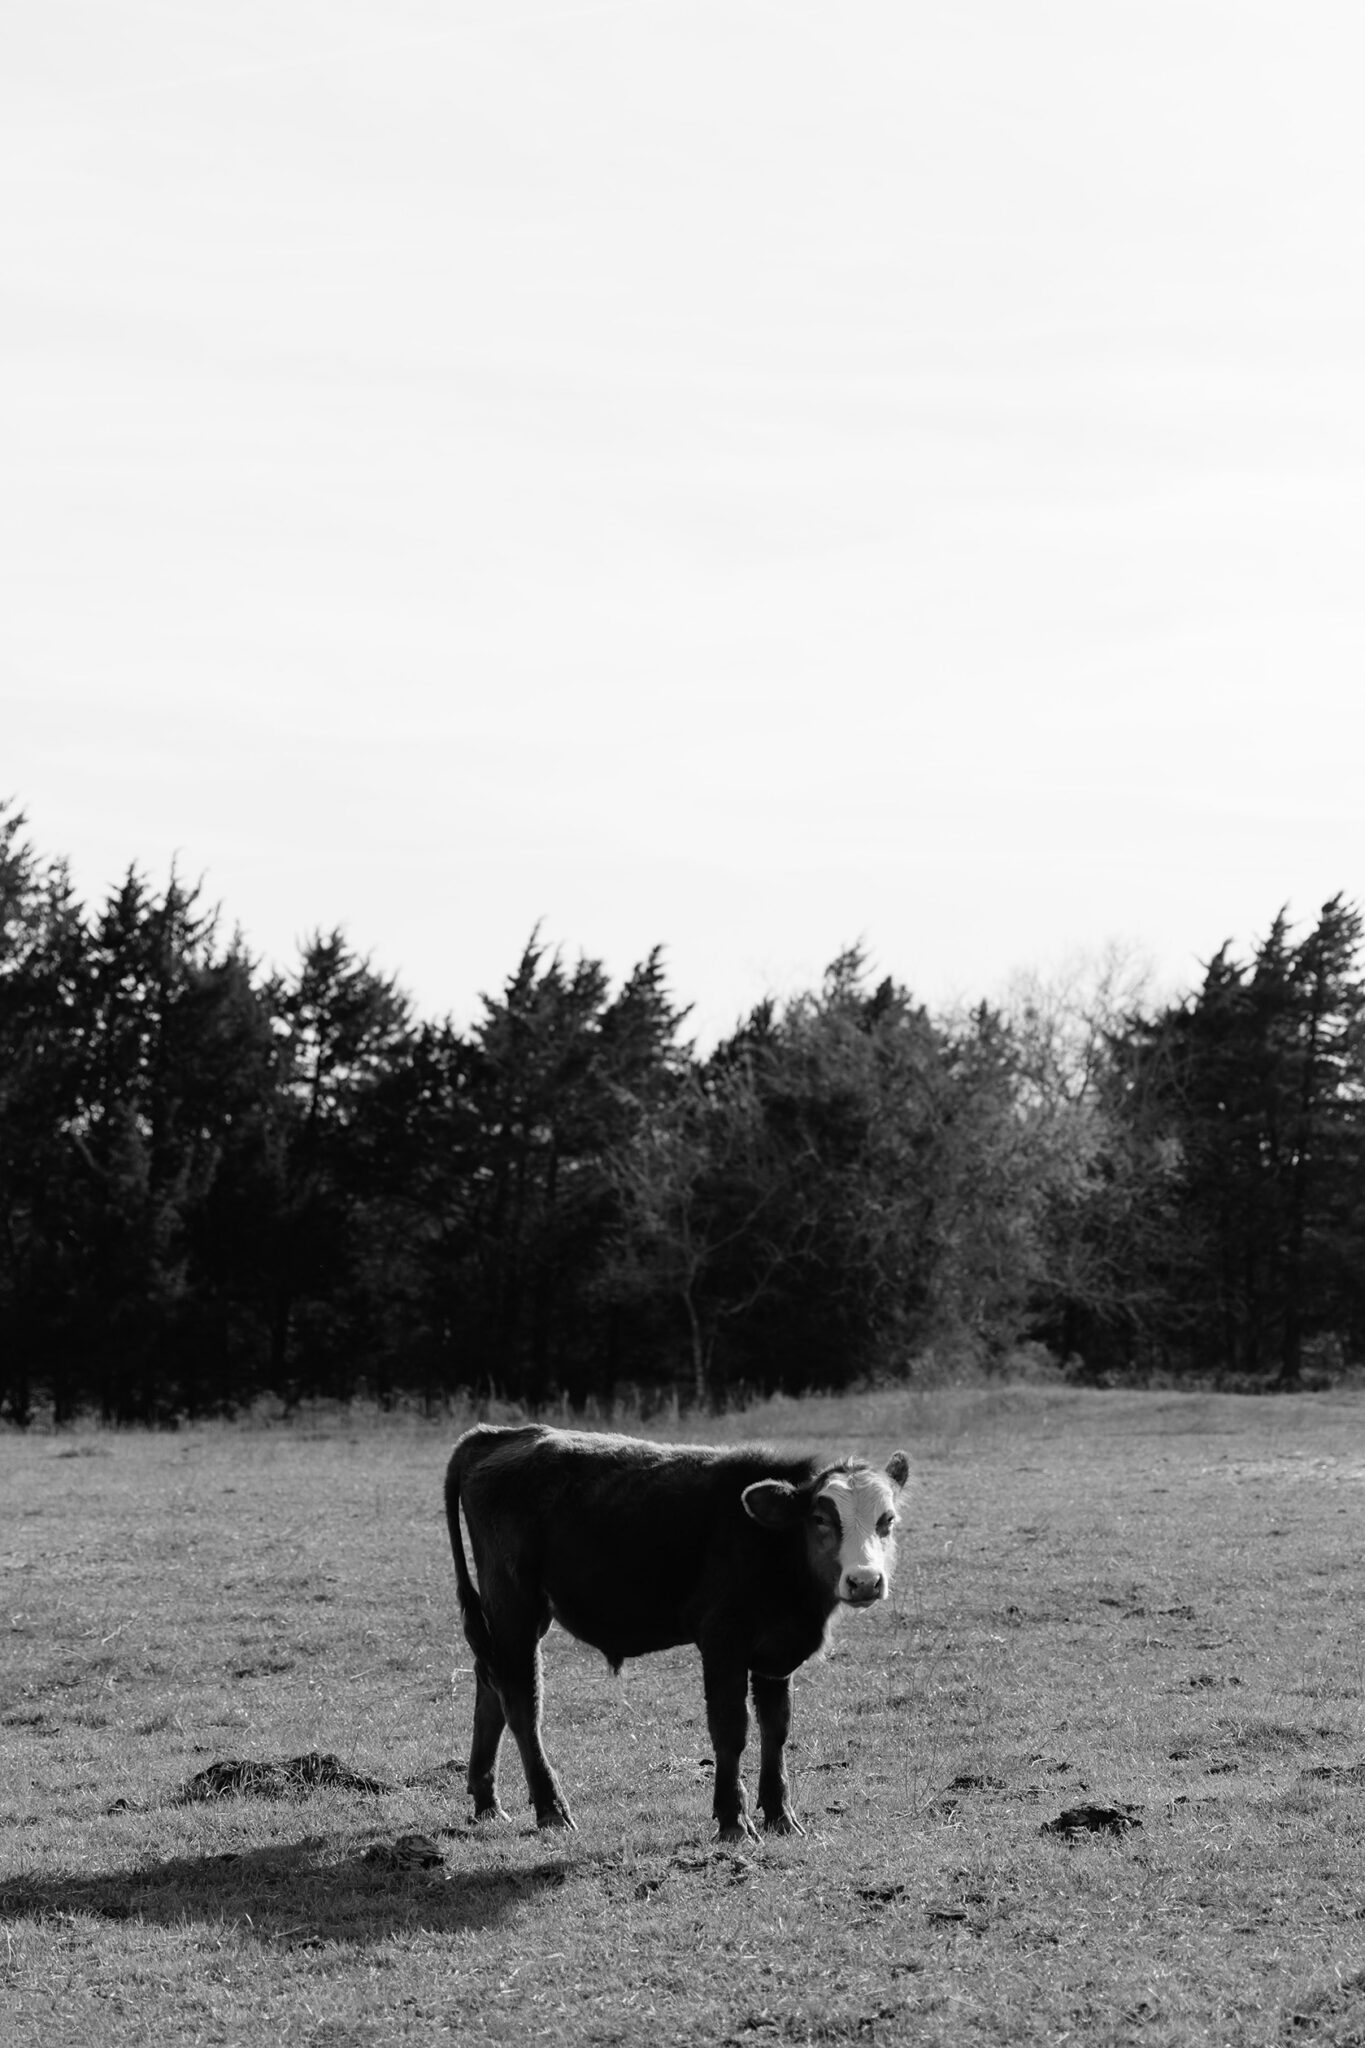 pottsboro texas baby cow in field